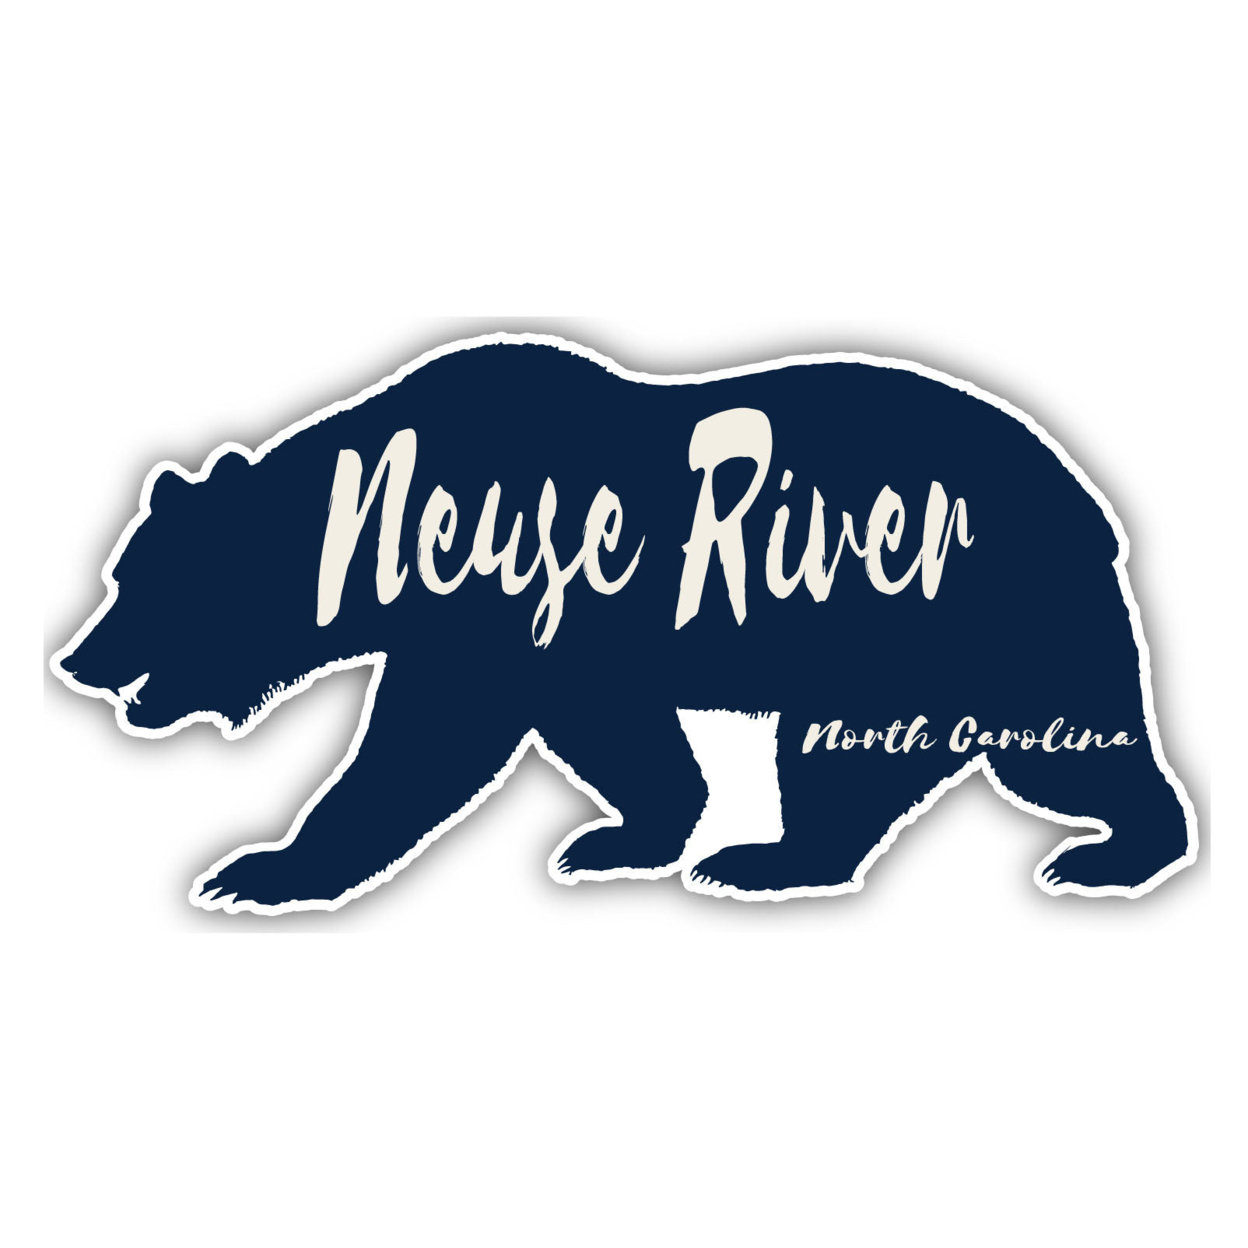 Neuse River North Carolina Souvenir Decorative Stickers (Choose Theme And Size) - Single Unit, 2-Inch, Bear